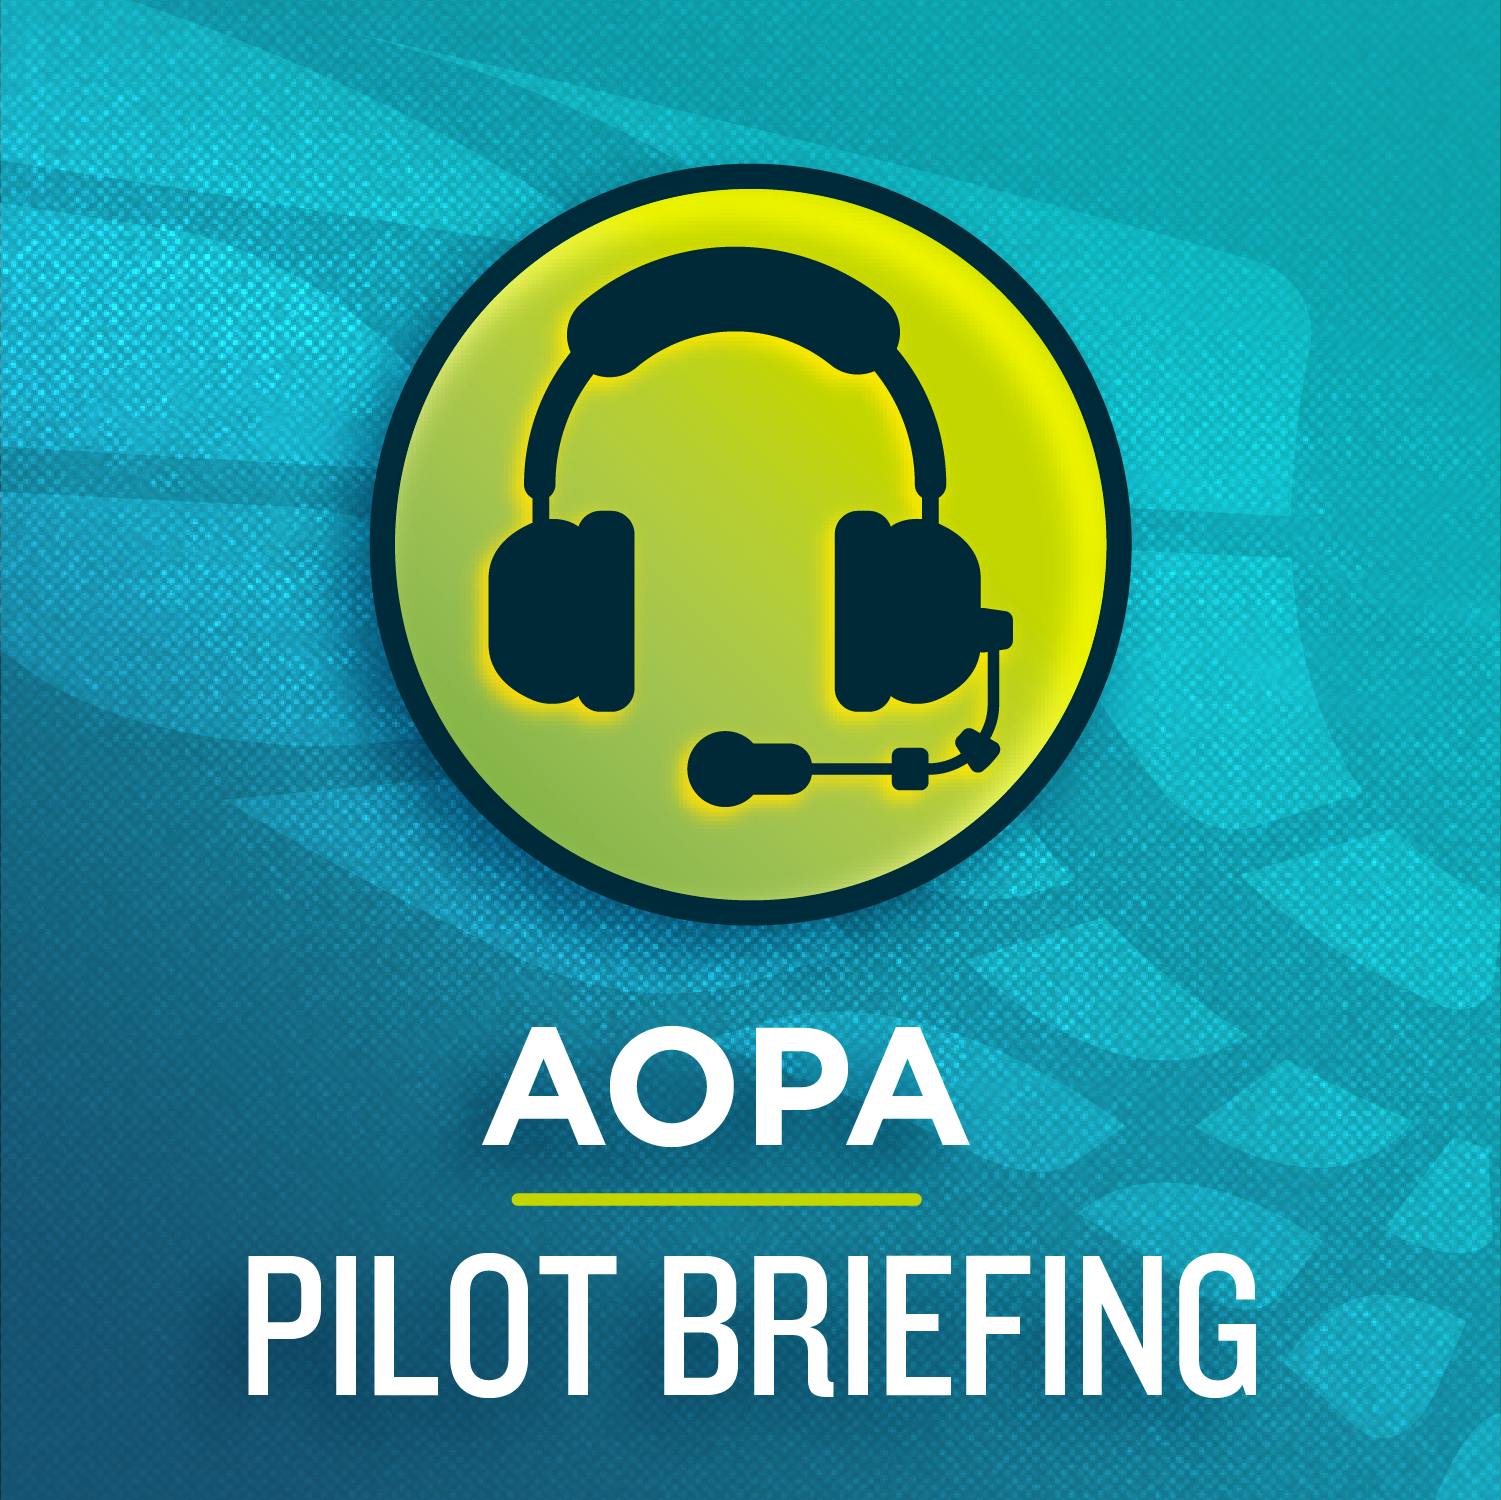 Season 4 Episode 6: Pilot Briefing - Week of February 7, 2022